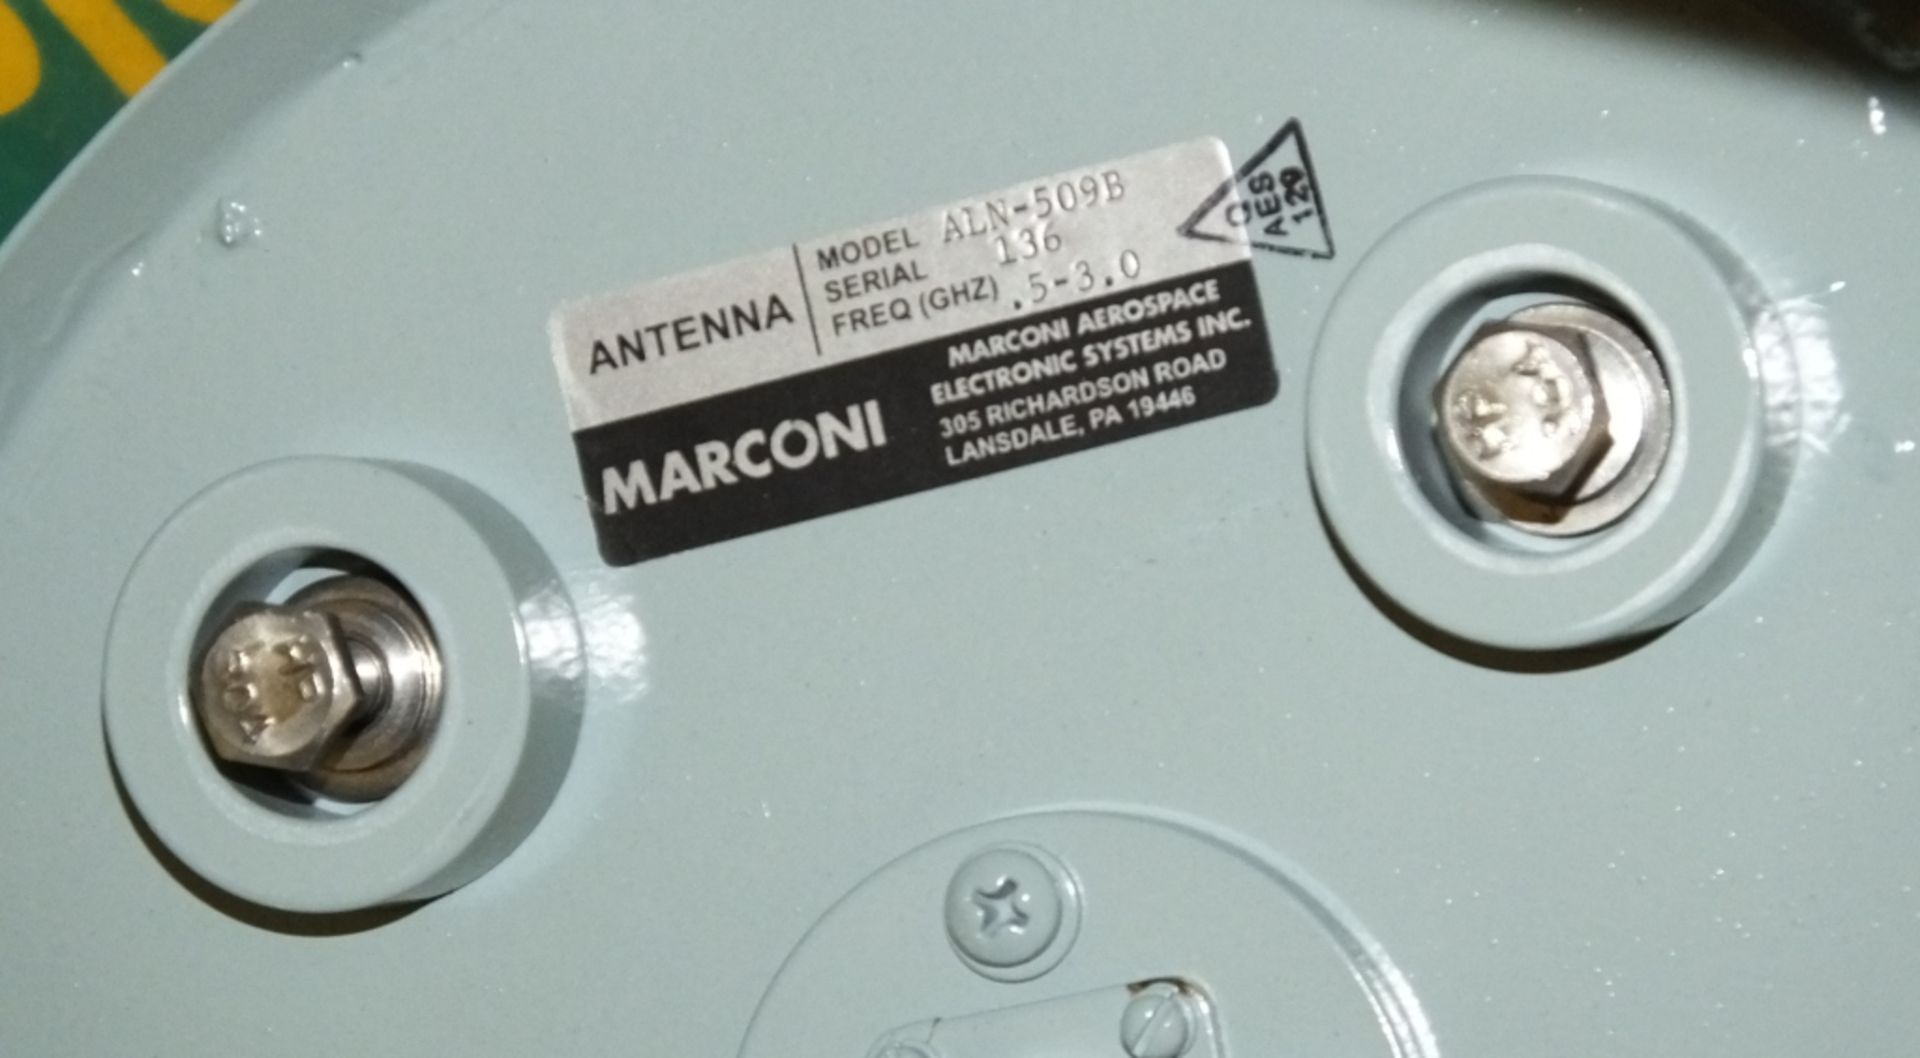 Marconi antenna H-1498R, Marconi antenna ALN-509B - Image 3 of 4